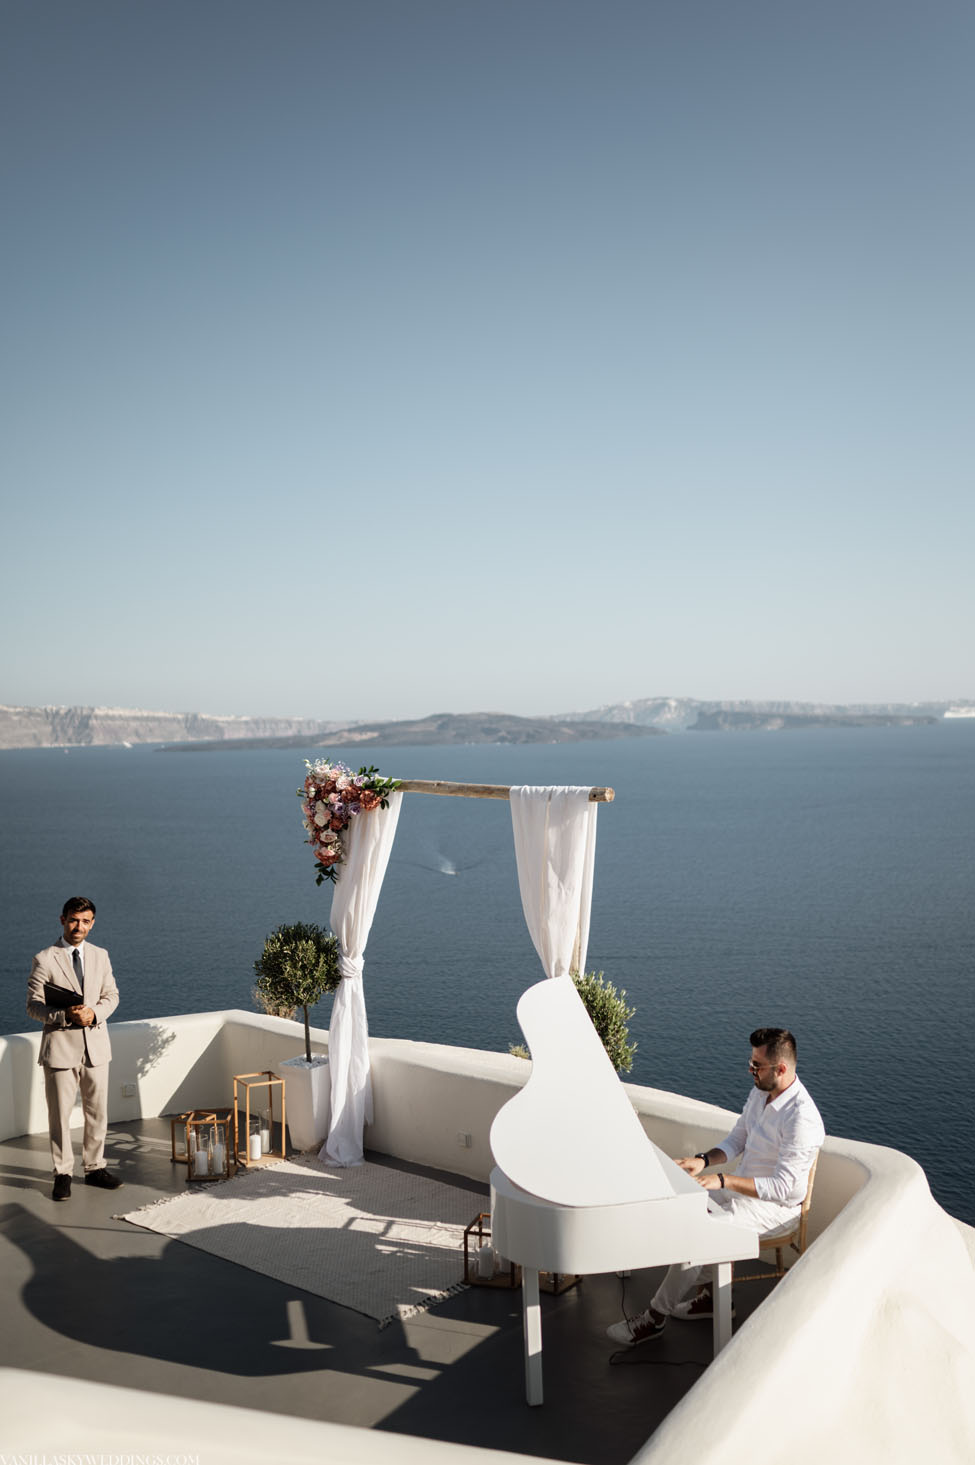 santorini_canaves_oia_suites_panorama_balcony_wedding_venue